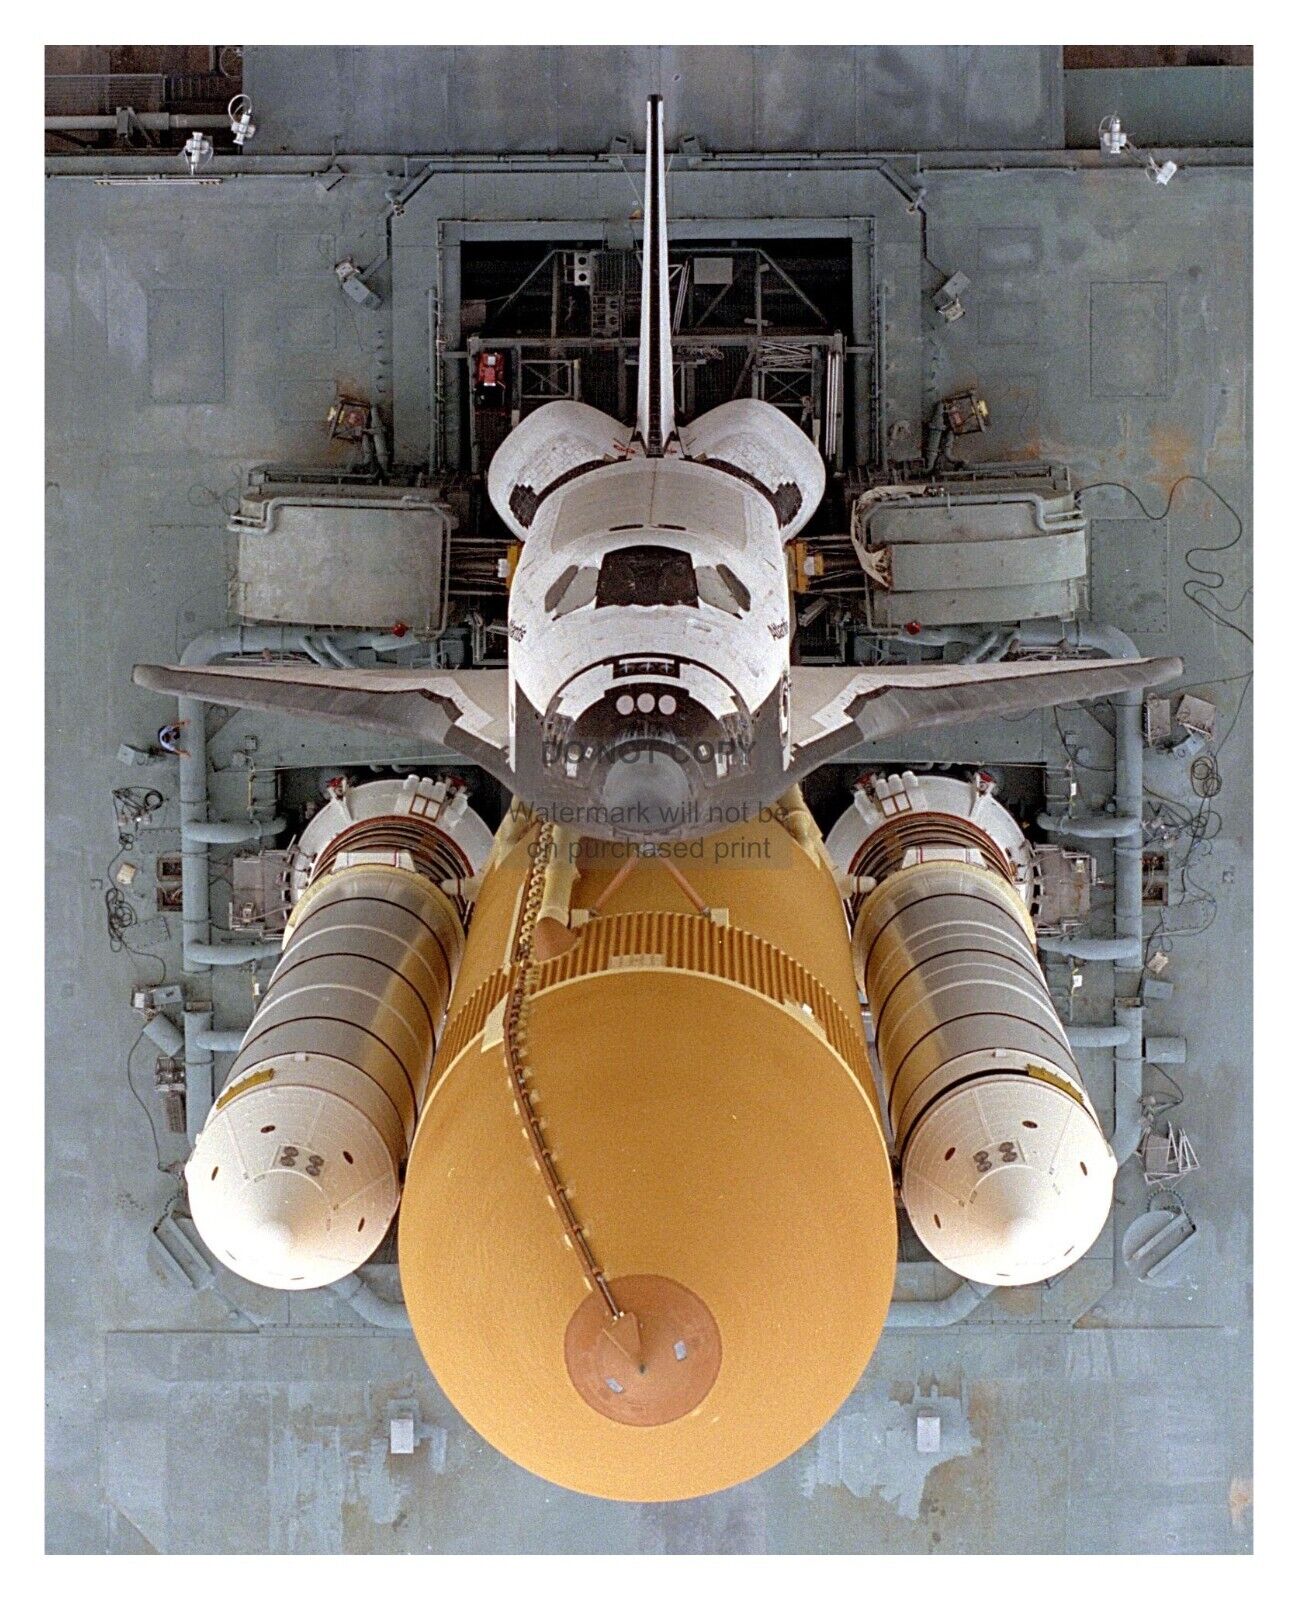 ATLANTIS SHUTTLE PREPARING TO LAUNCH STS-79 OVERHEAD VIEW 8X10 PHOTO REPRINT